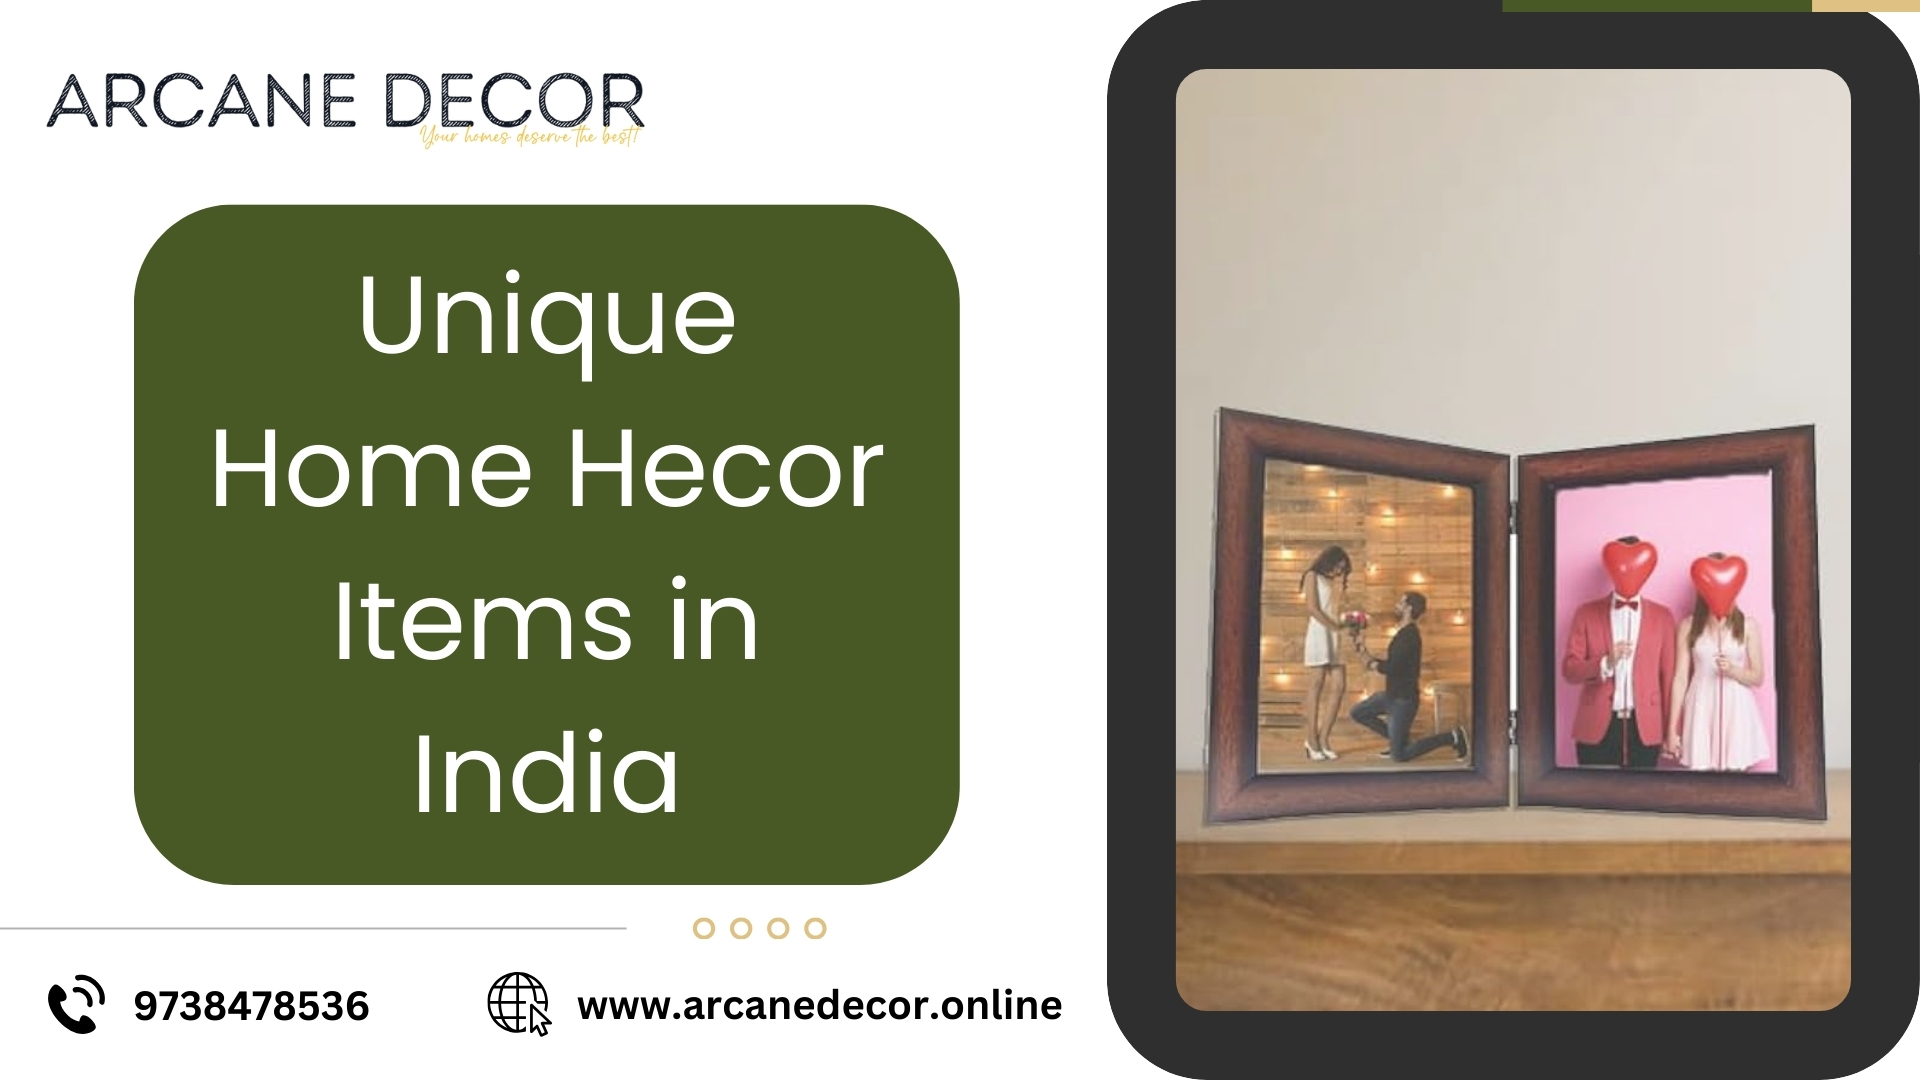  Get Unique Home Decor Items in India